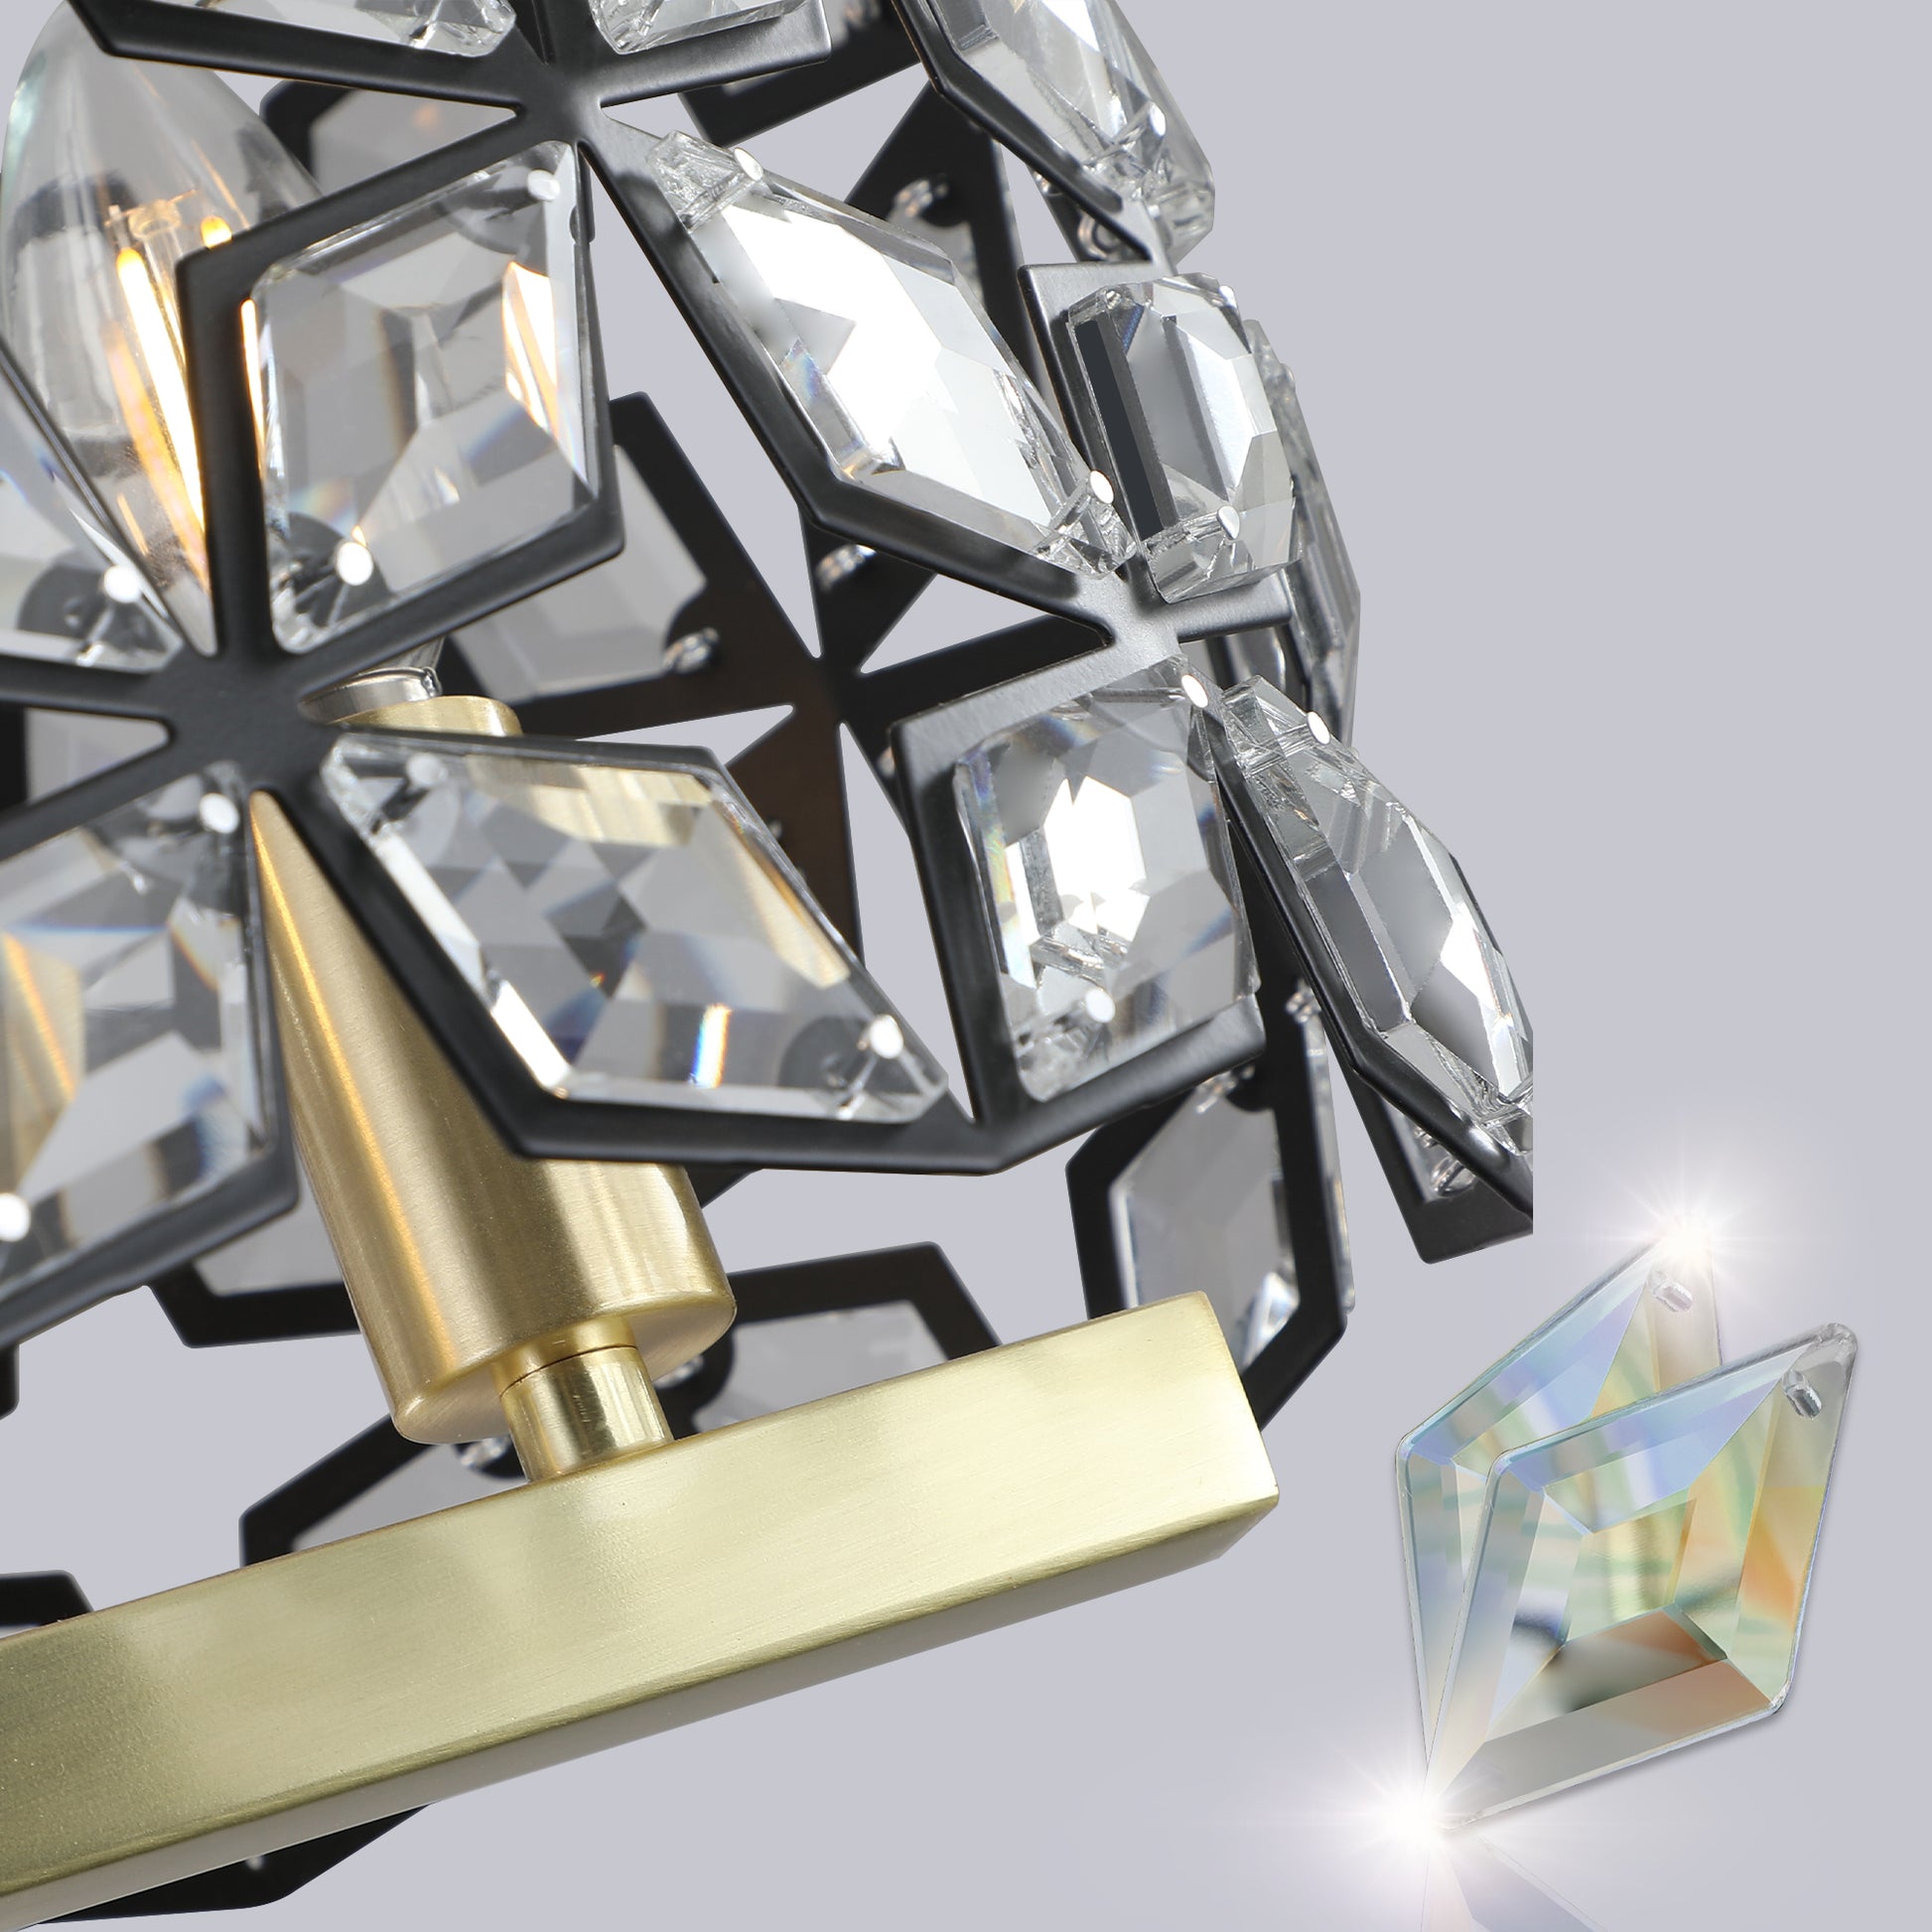 a close up of a light fixture with a diamond